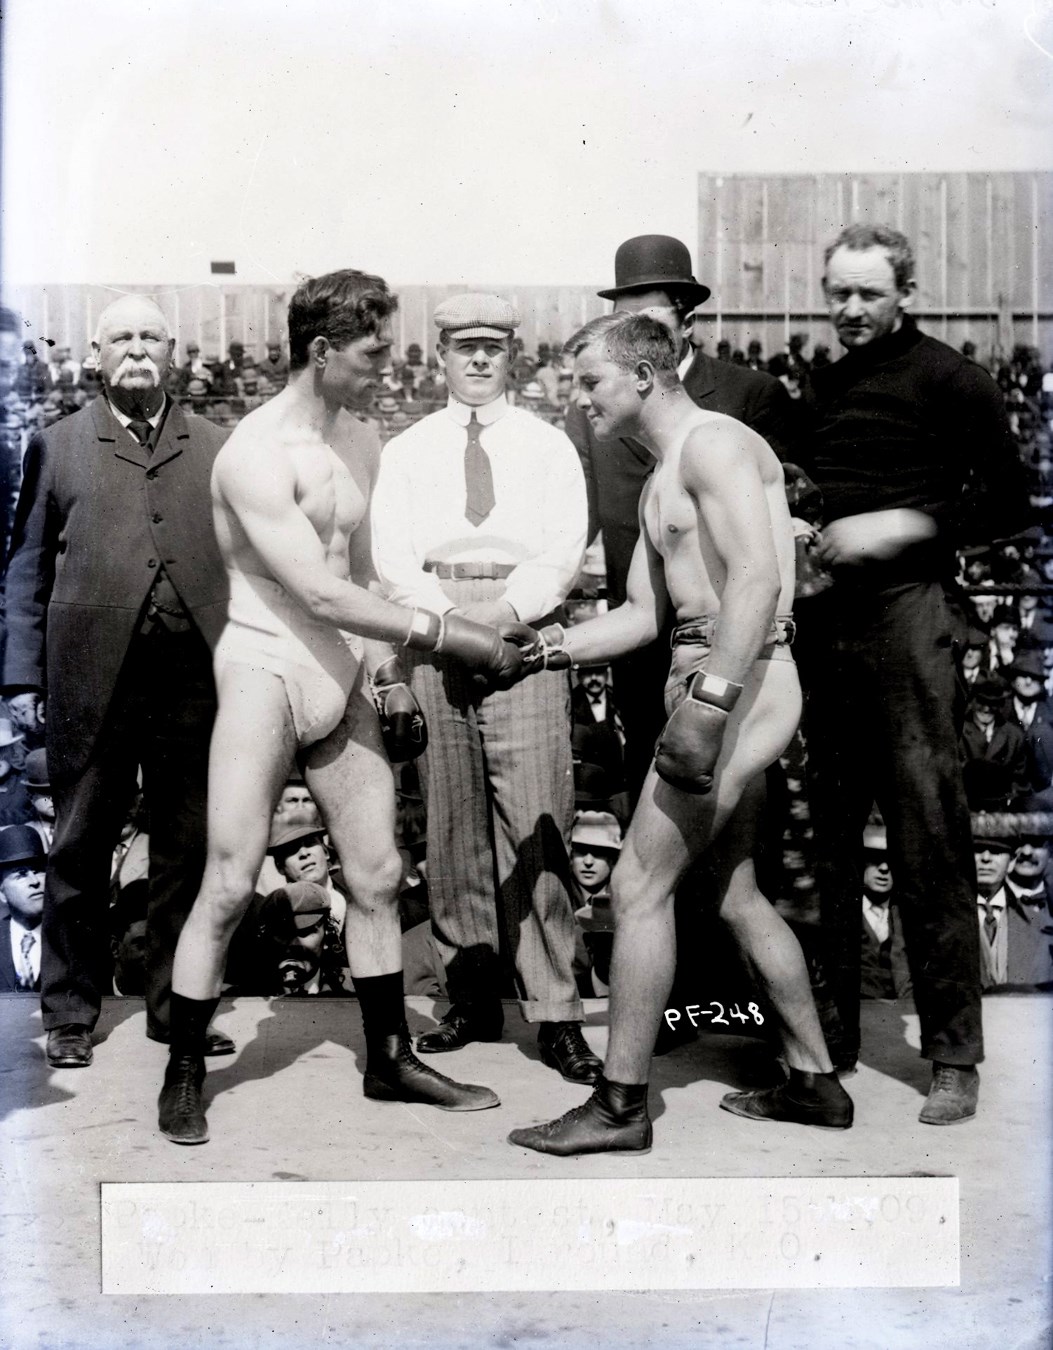 - 1909 Billy Parke vs. Hugo Kelly "Pre-Fight Handshake" Type I Glass Plate Negative by Dana Studio